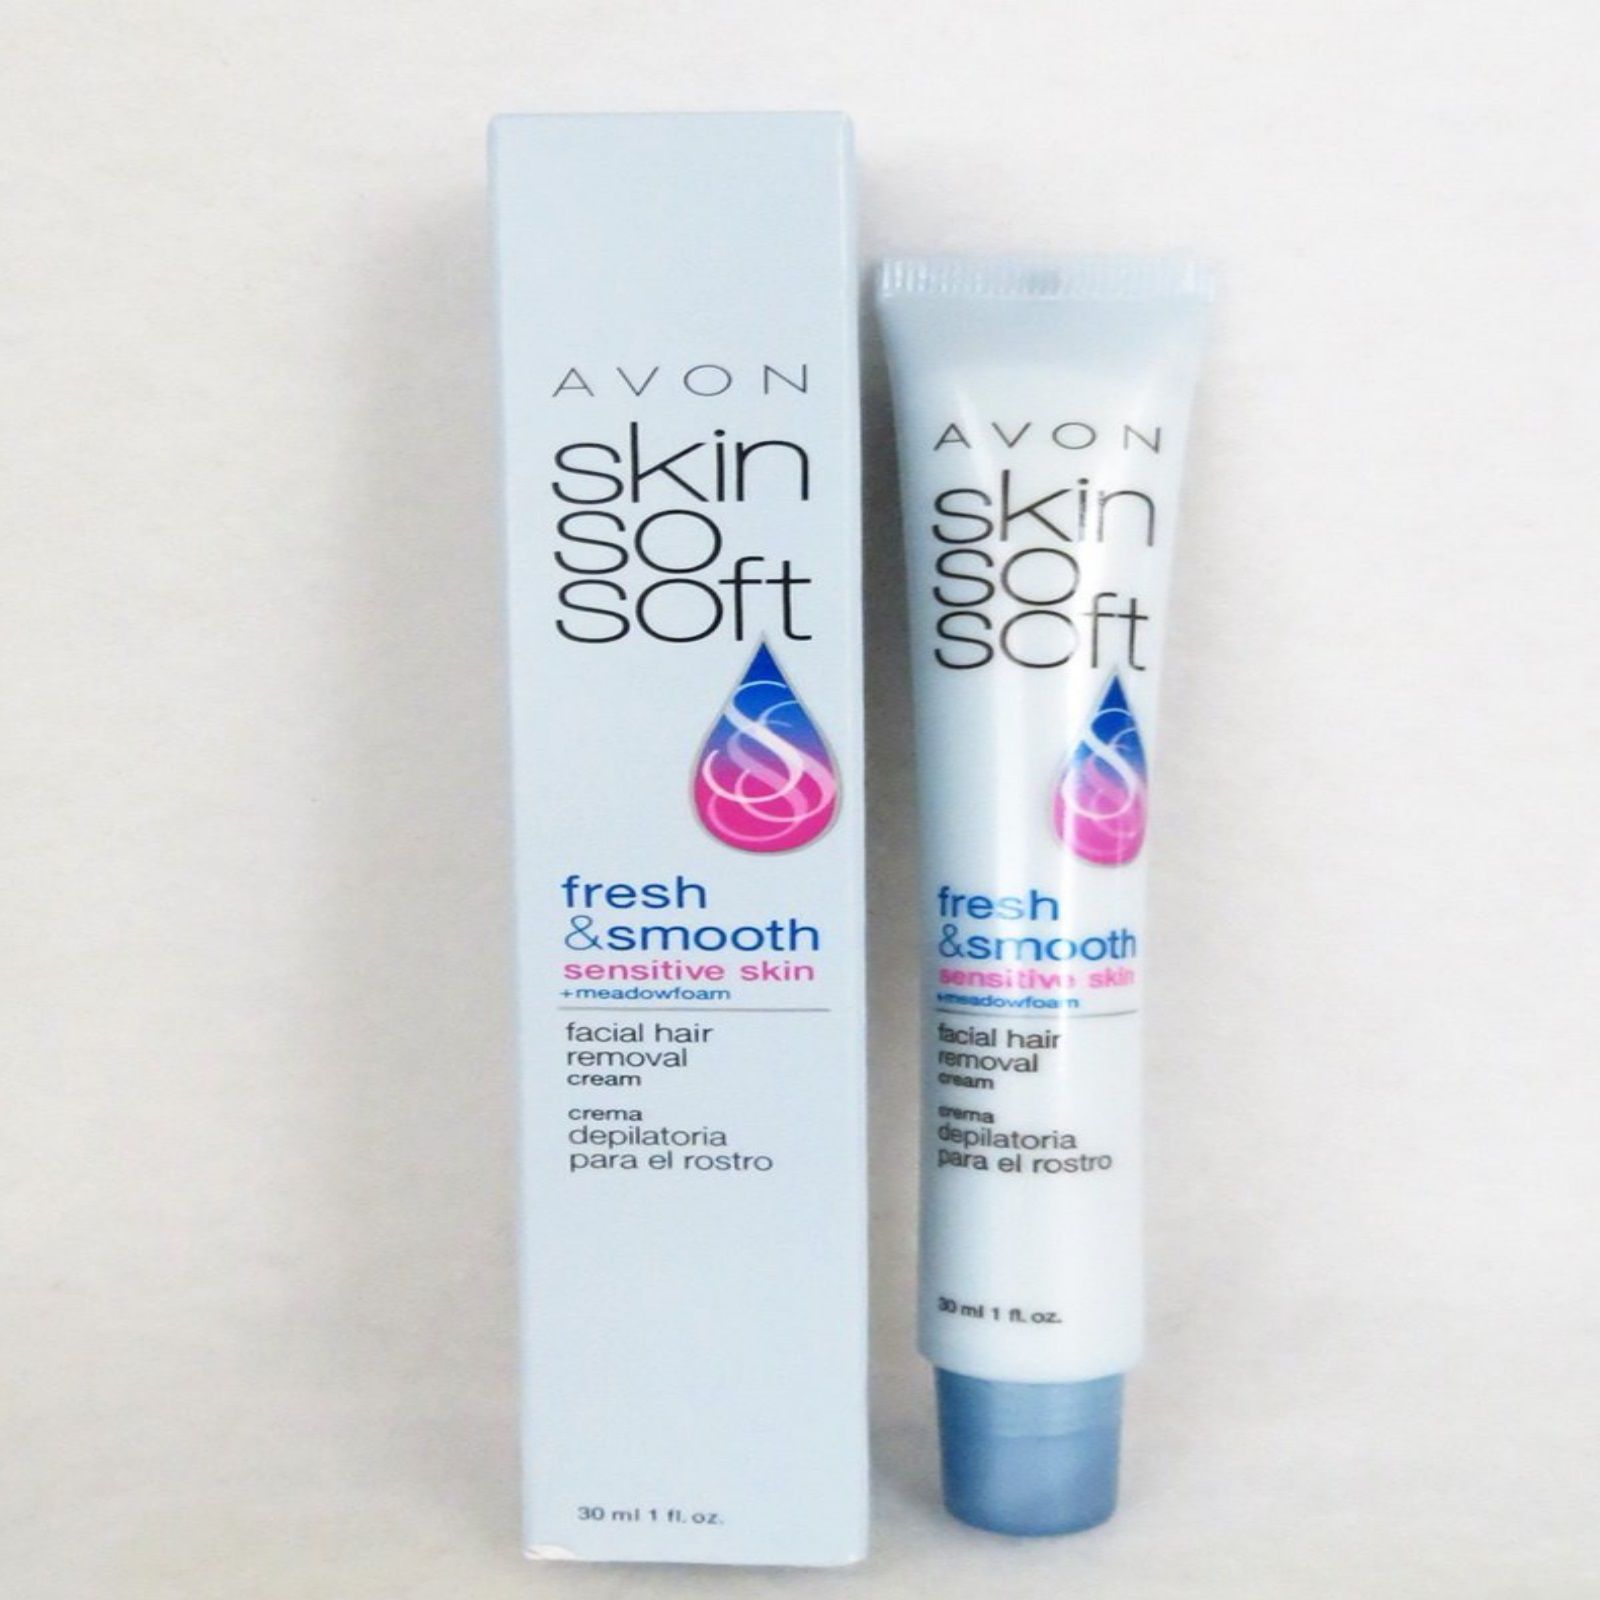 Avon Skin So Soft Facial Hair Removal Cream Review